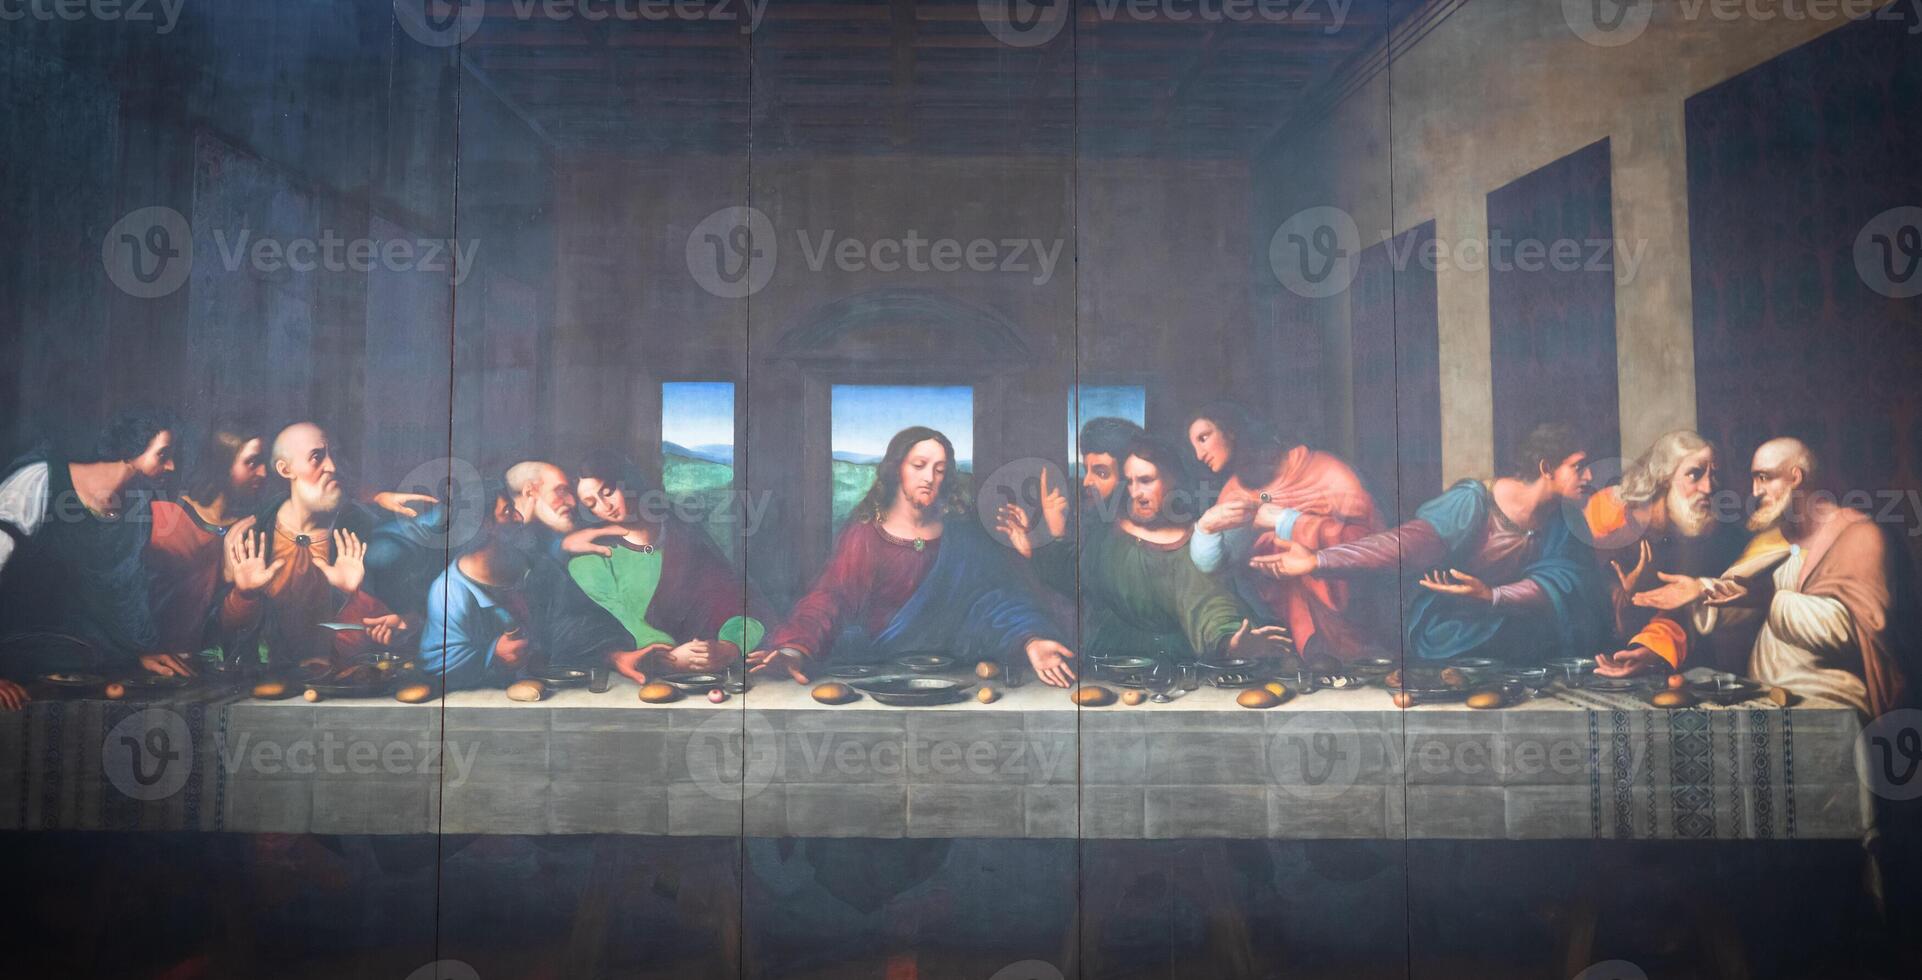 The painting of Last Supper in Turin Duomo after Leonardo da Vinci photo